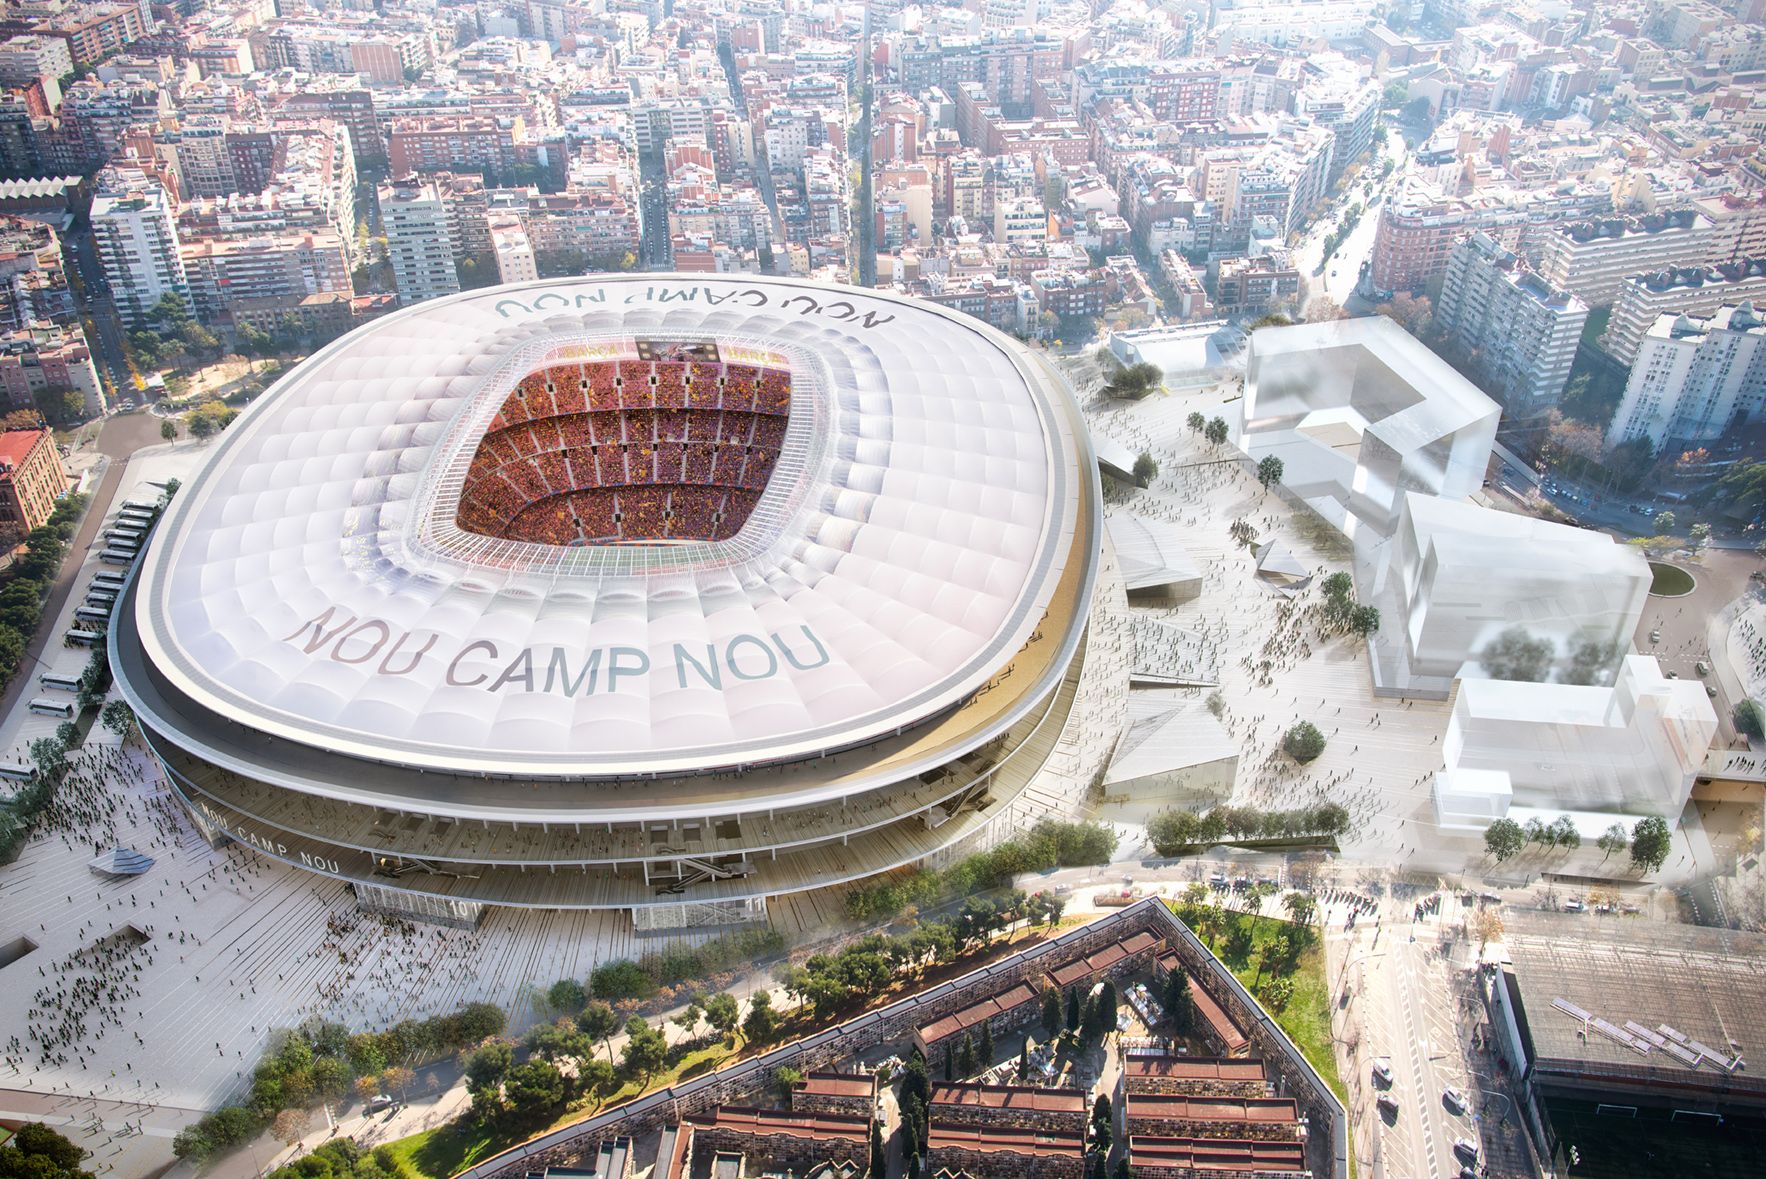 Камп нов. Стадион Камп ноу в Барселоне. Барселона футбольный стадион Камп ноу. Барселона стадион Camp nou. Новый Камп ноу стадион.